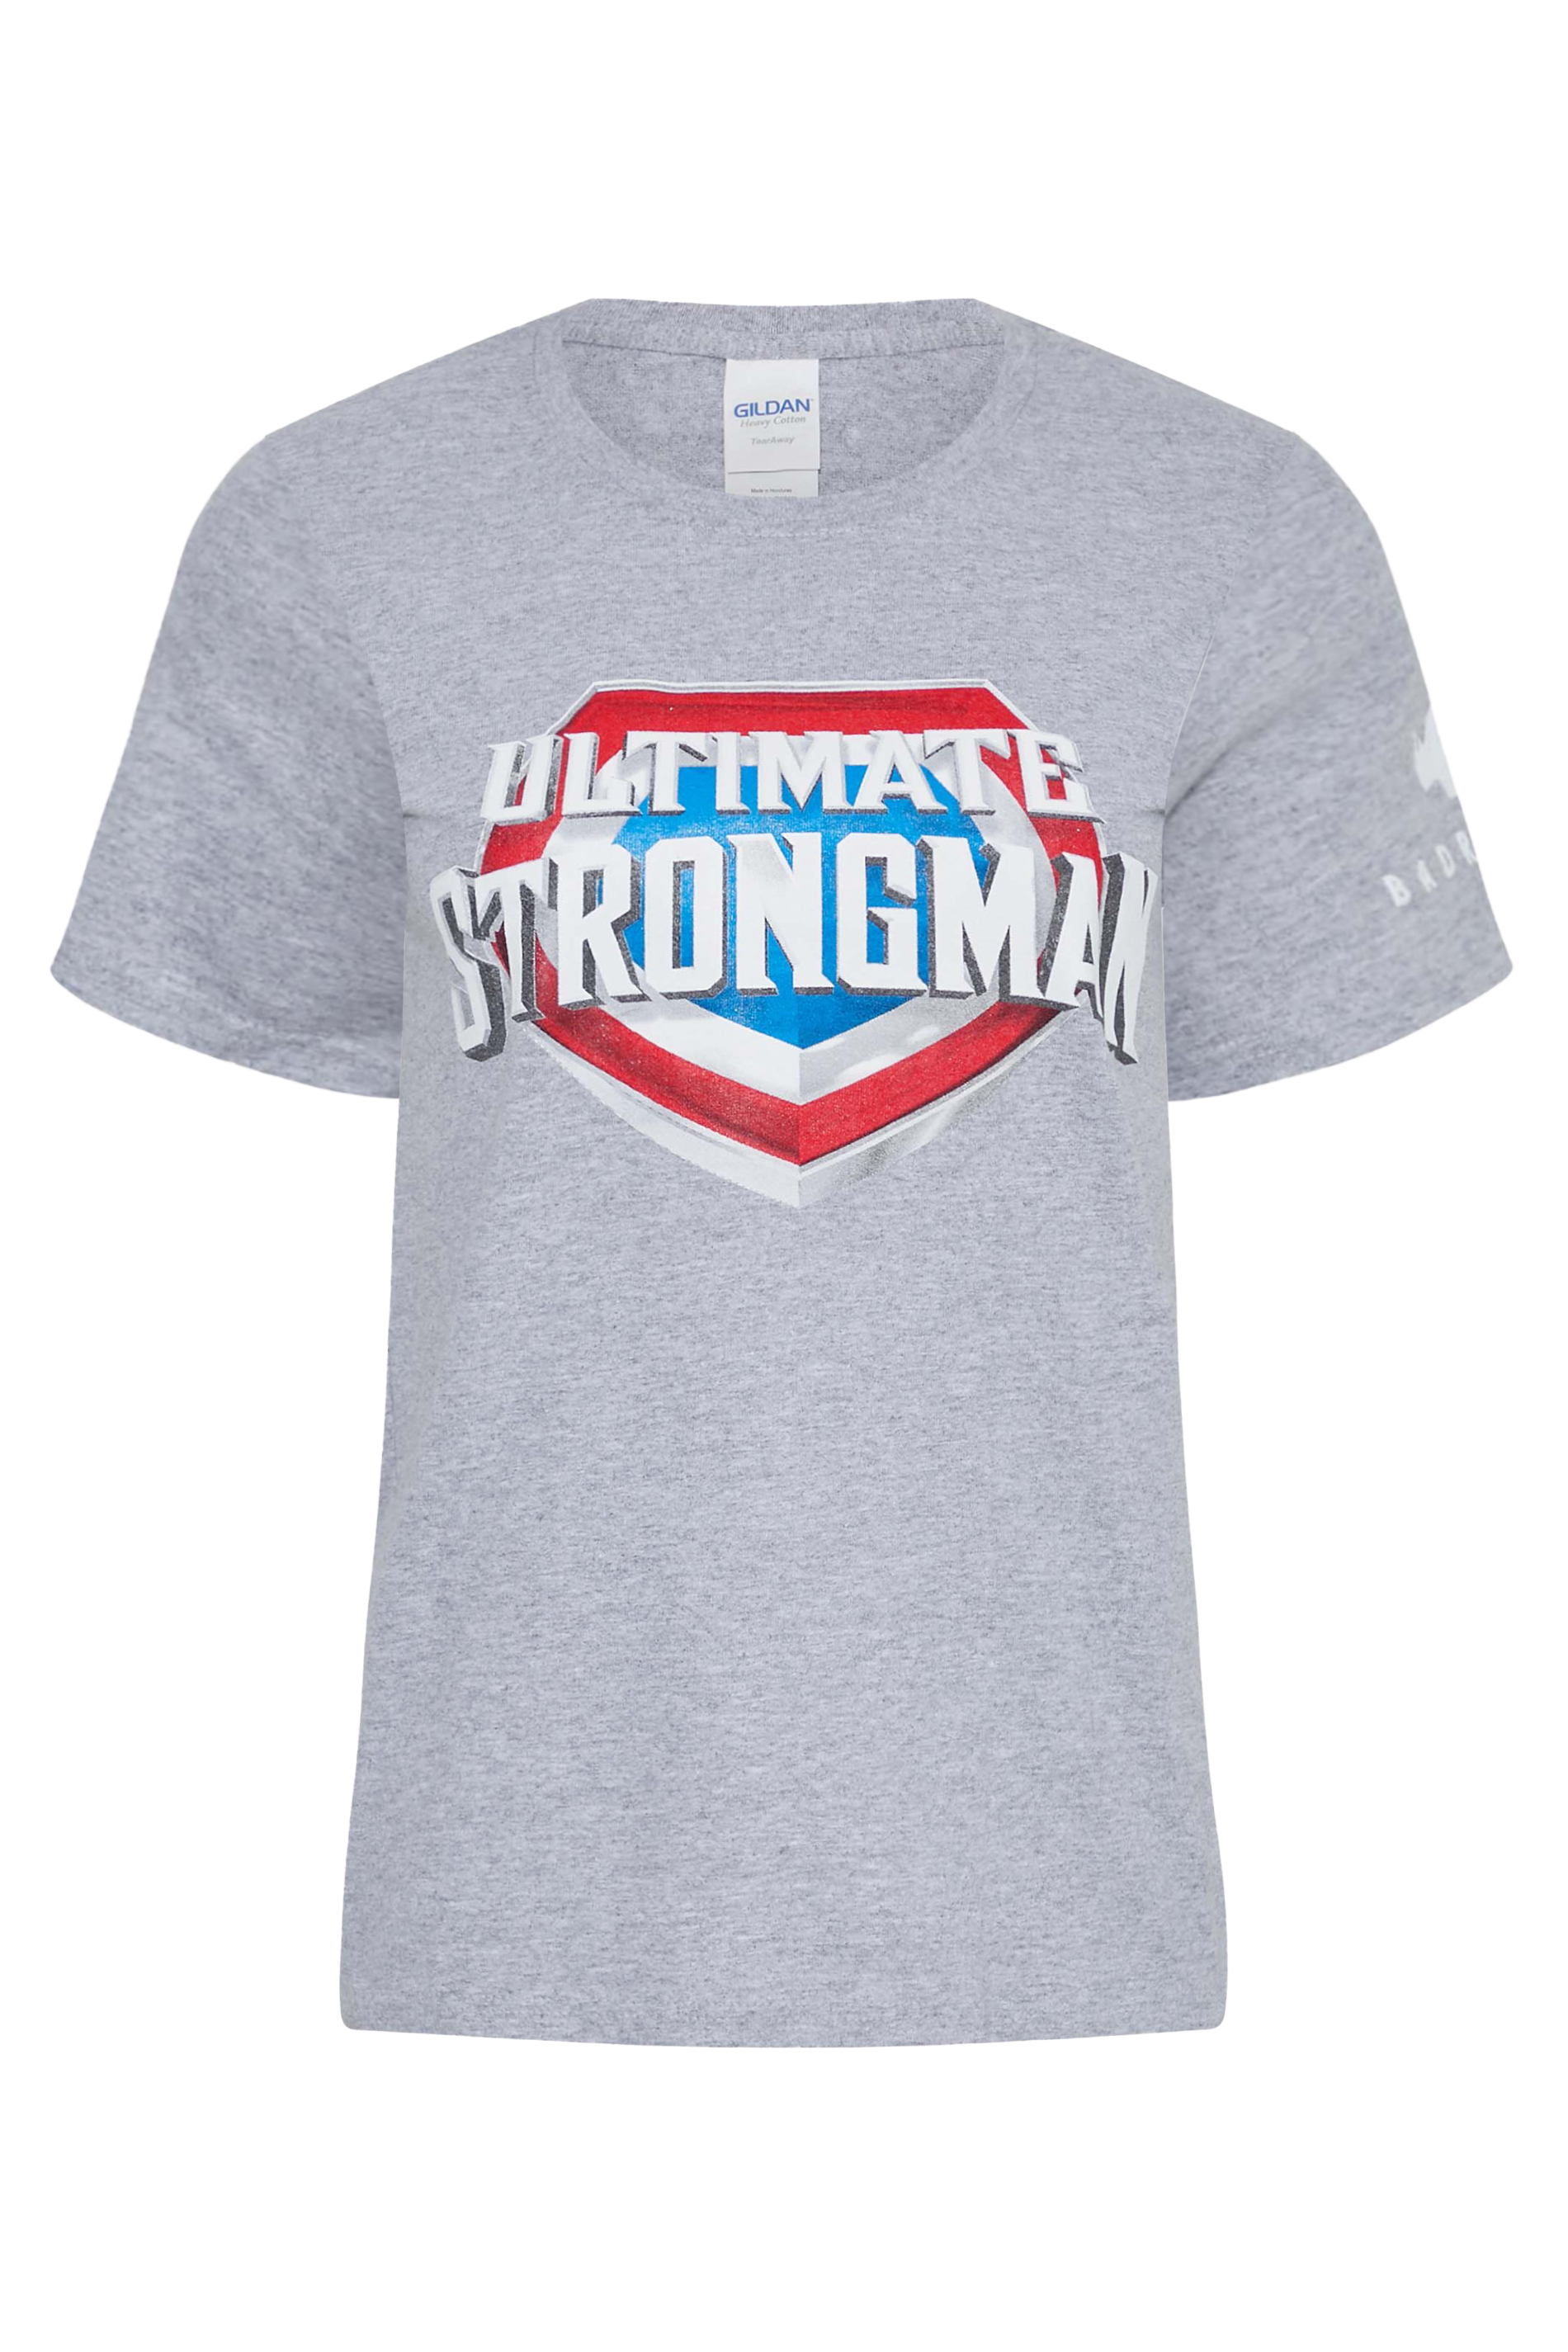 BadRhino Girls Grey Ultimate Strongman T-Shirt | BadRhino 1